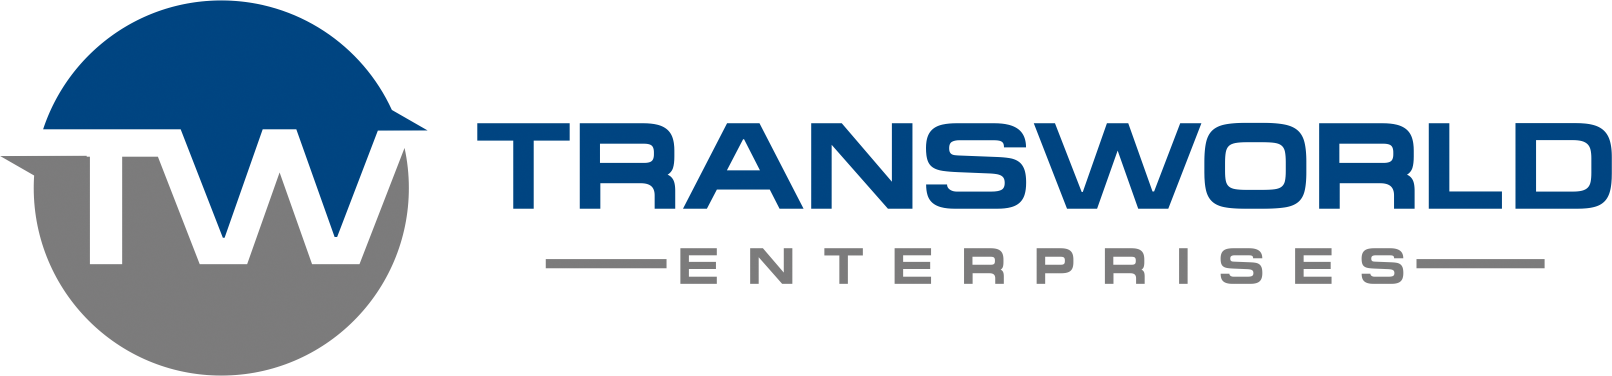 Transworld Enterprises, Ltd.